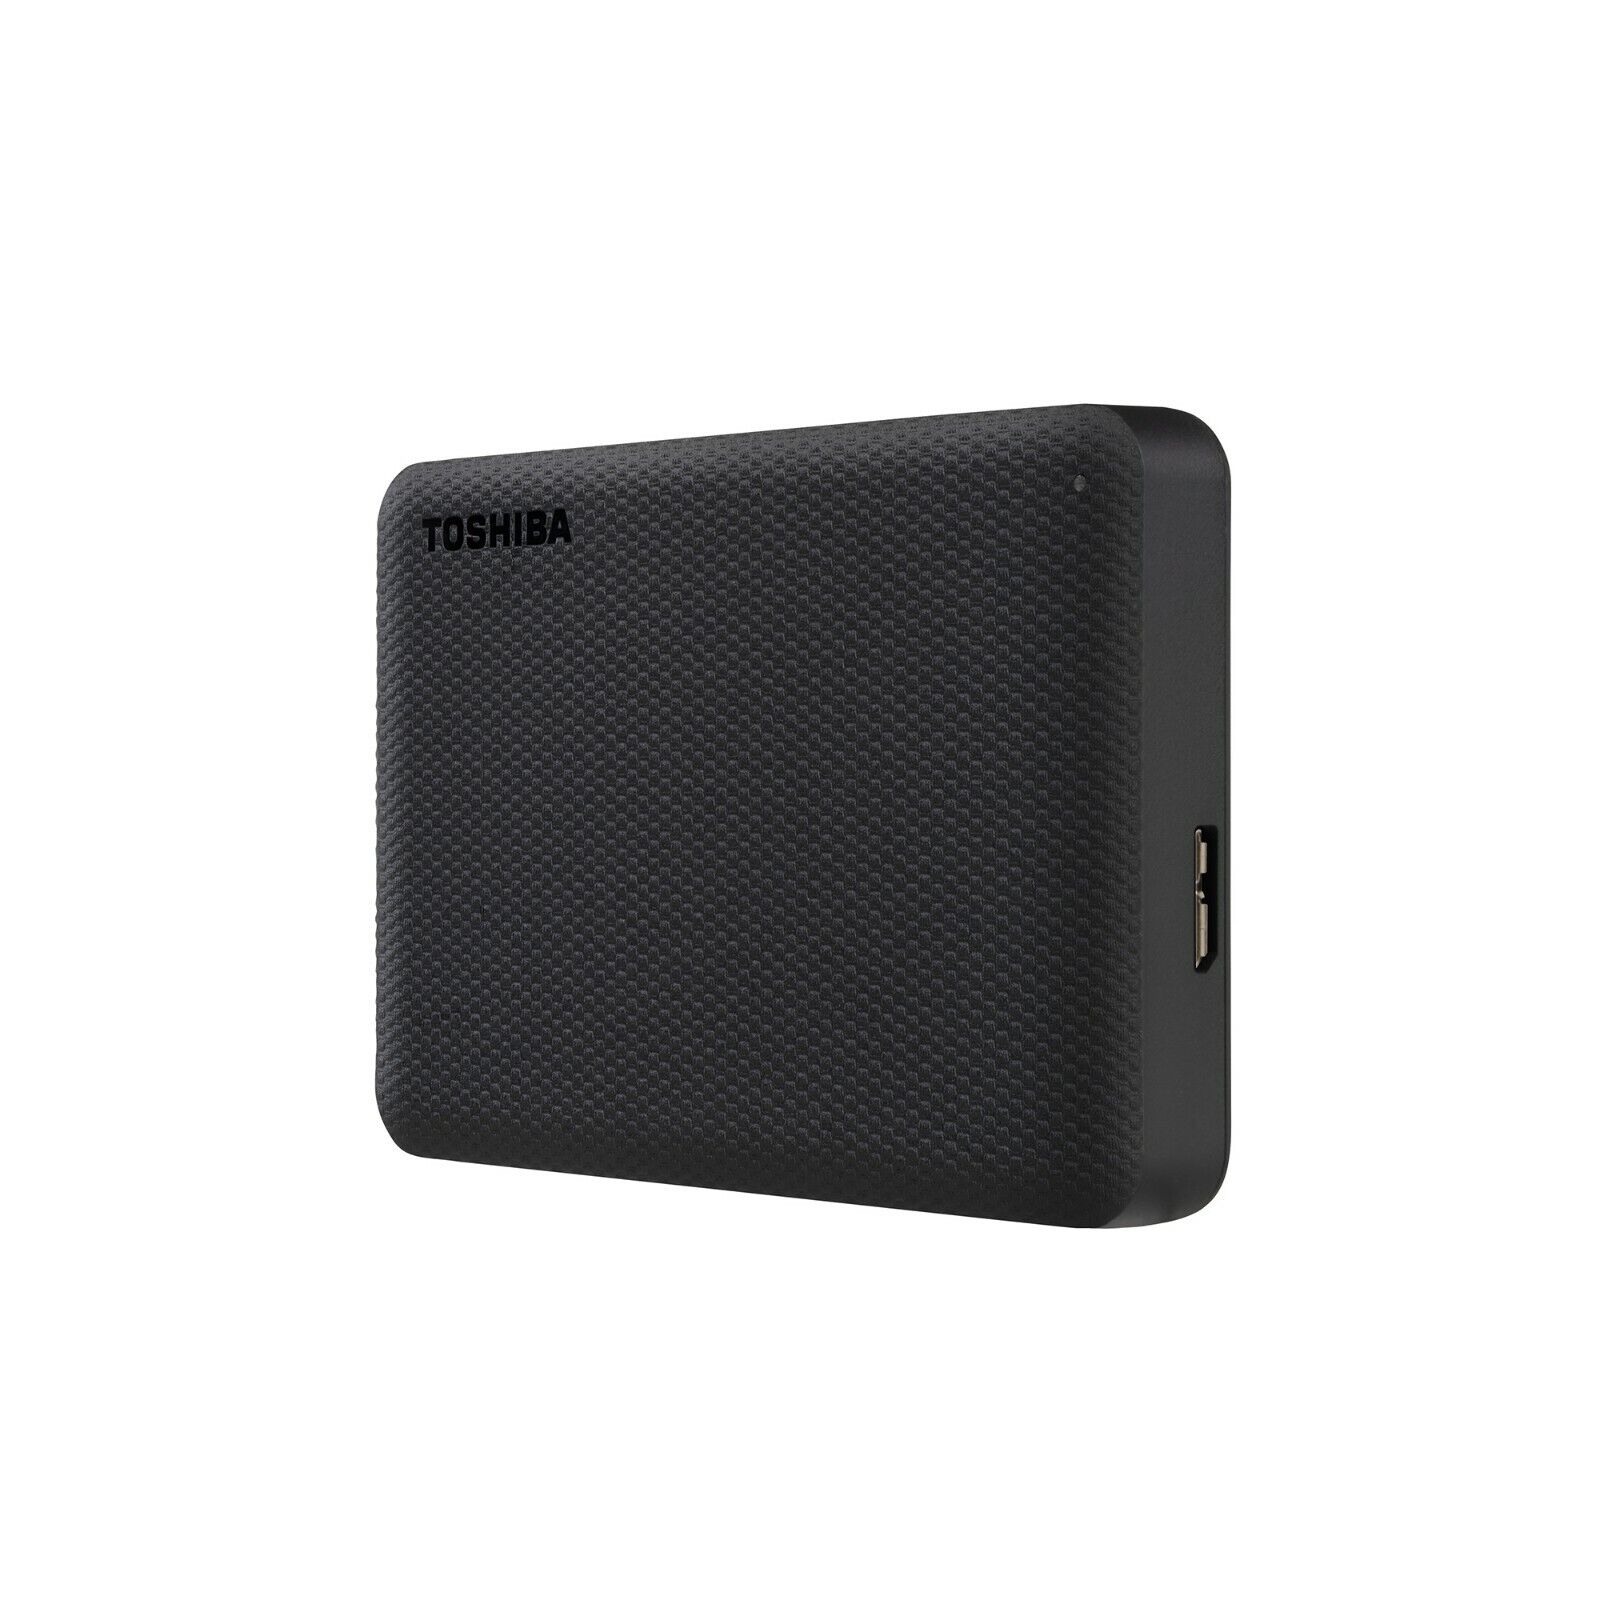 Toshiba External Hard Drive 4TB, Portable Canvio Advance USB 3.0, Black